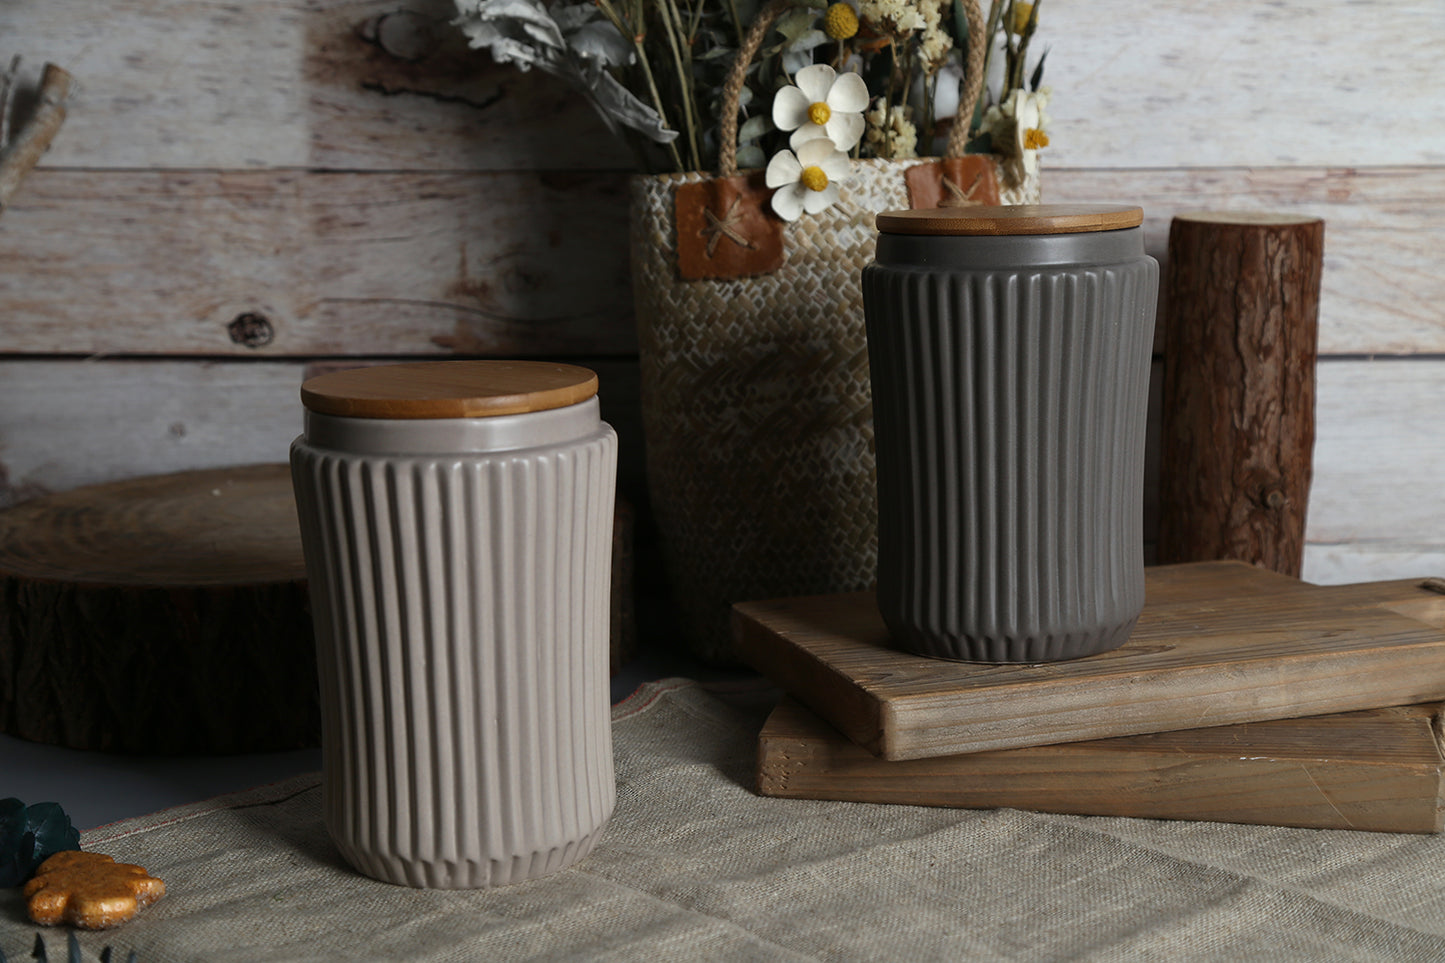 Wooden lid dolomite food jar with embossed vertical stripes pattern | Item NO.: 202D-001B